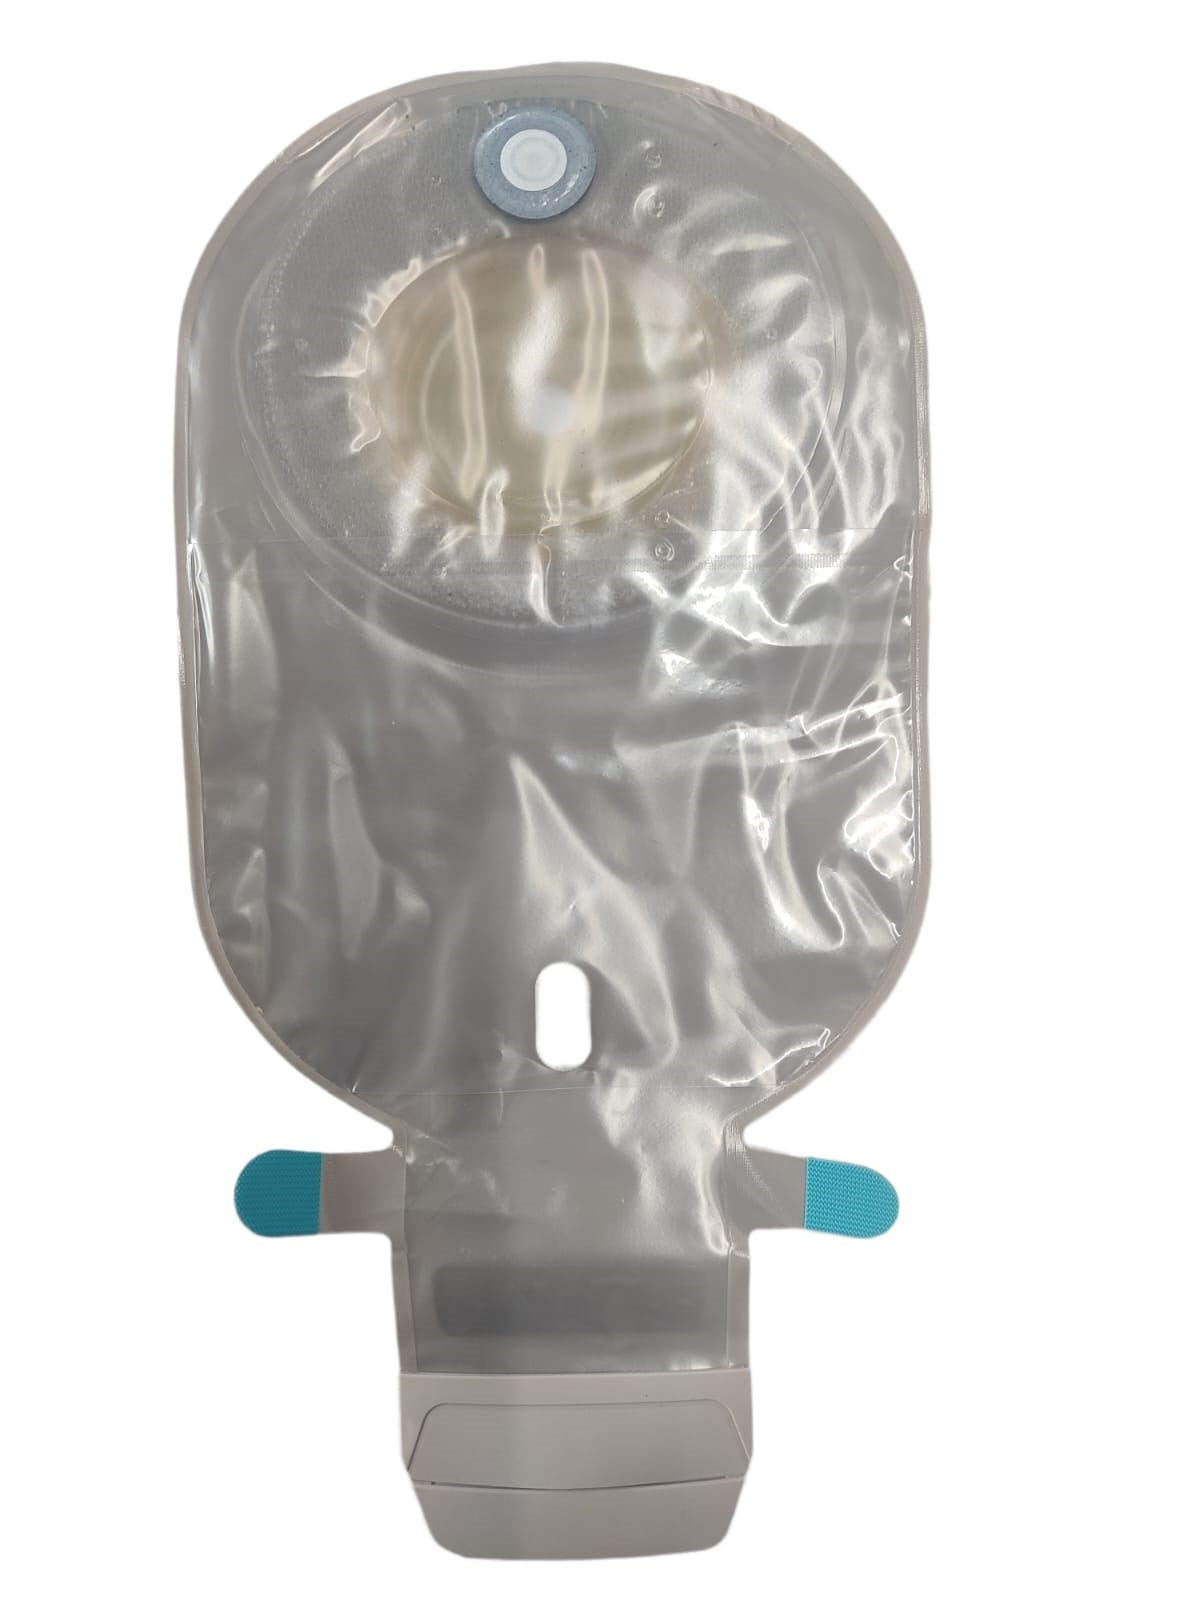 Coloplast Sensura Mio Soft Convex 1-Piece Transparent Ostomy Bag Maxi 10-50mm 16415